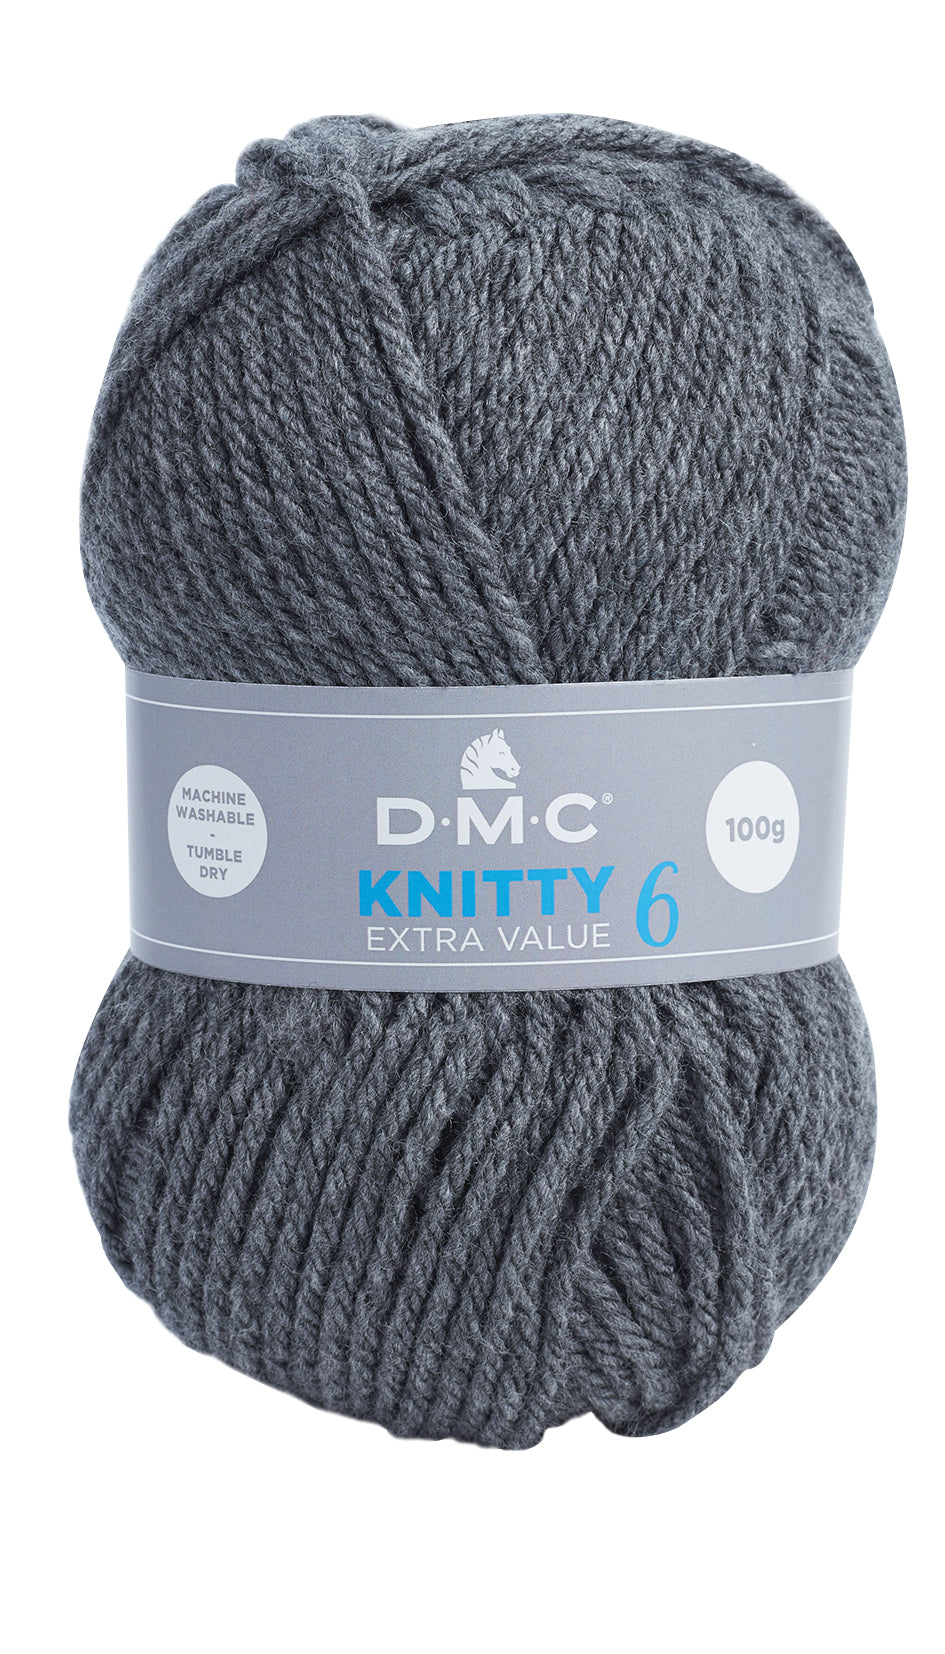 Lana Dmc Knitty 6 Colore 786